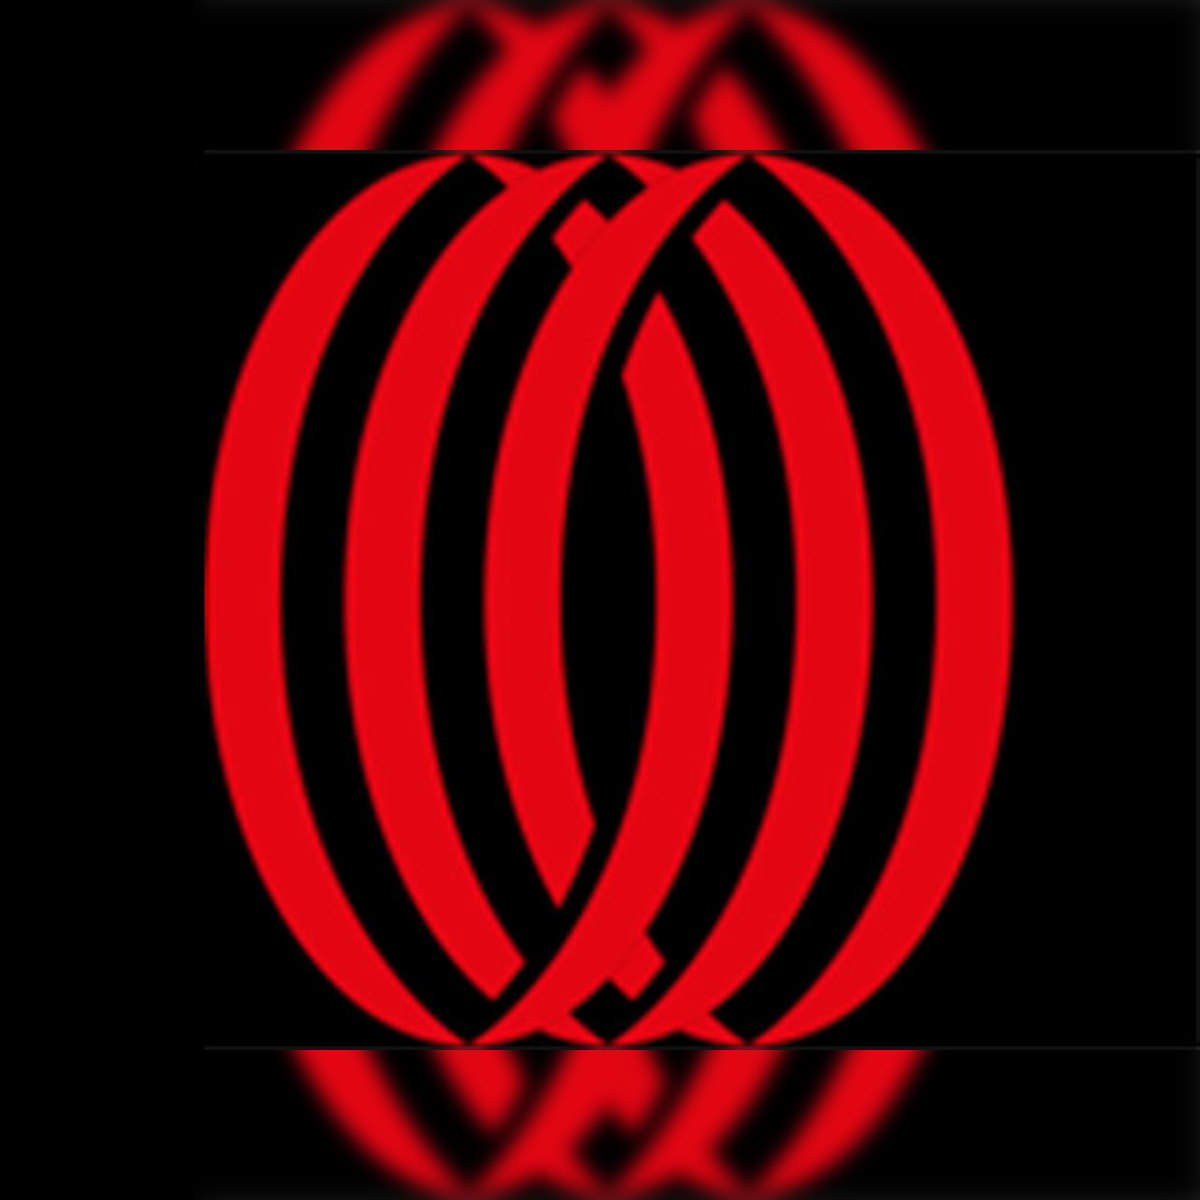 File:JLL logo.svg - Wikipedia